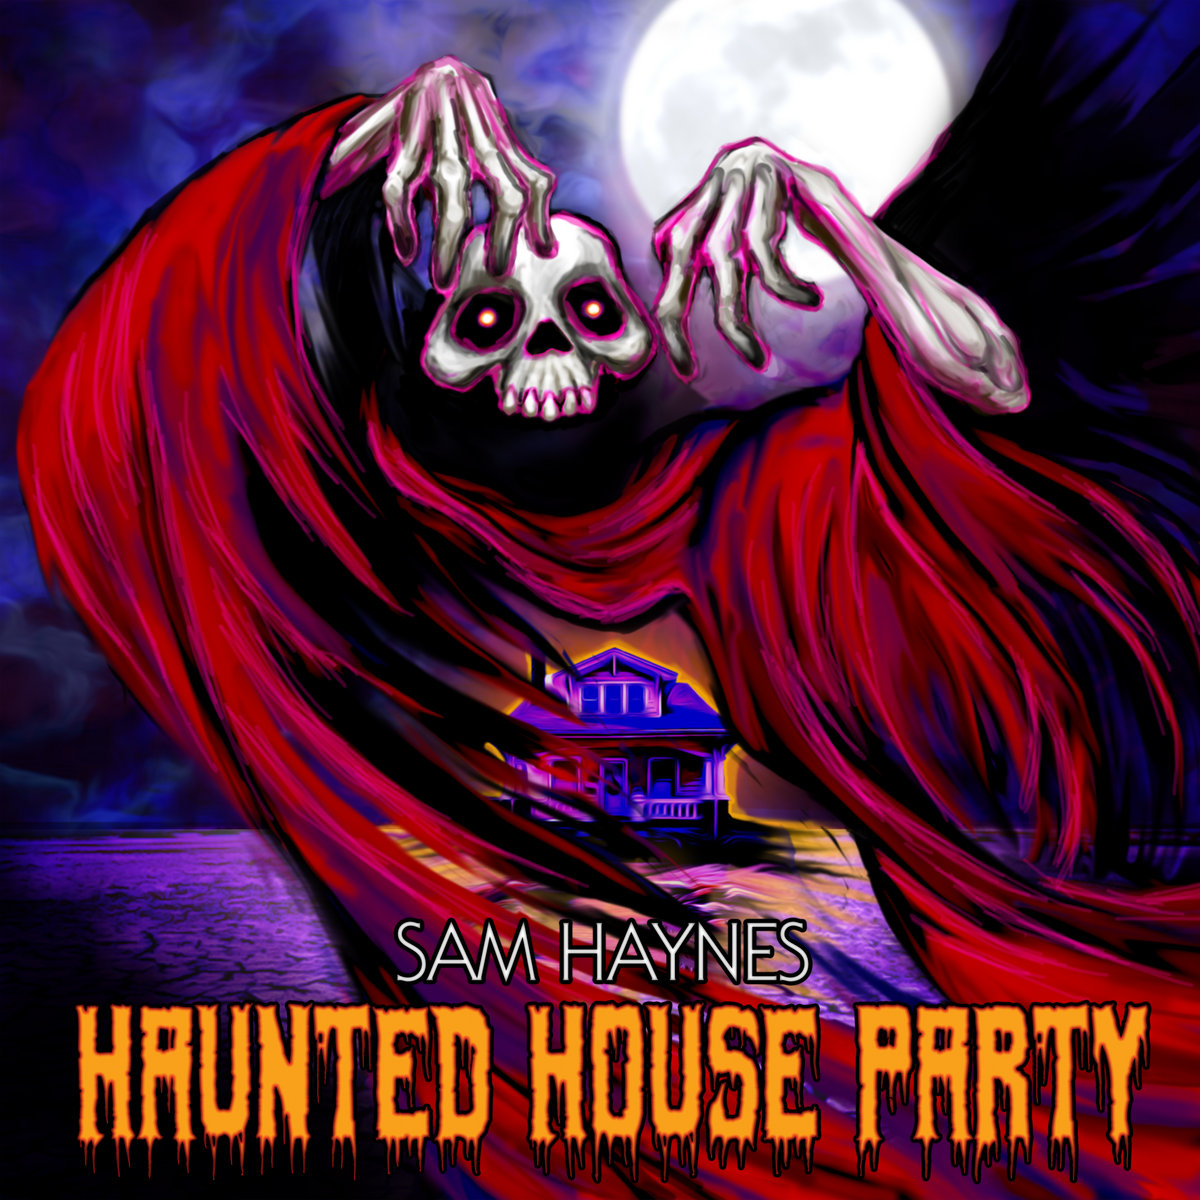 Sam Haynes Haunted House Party